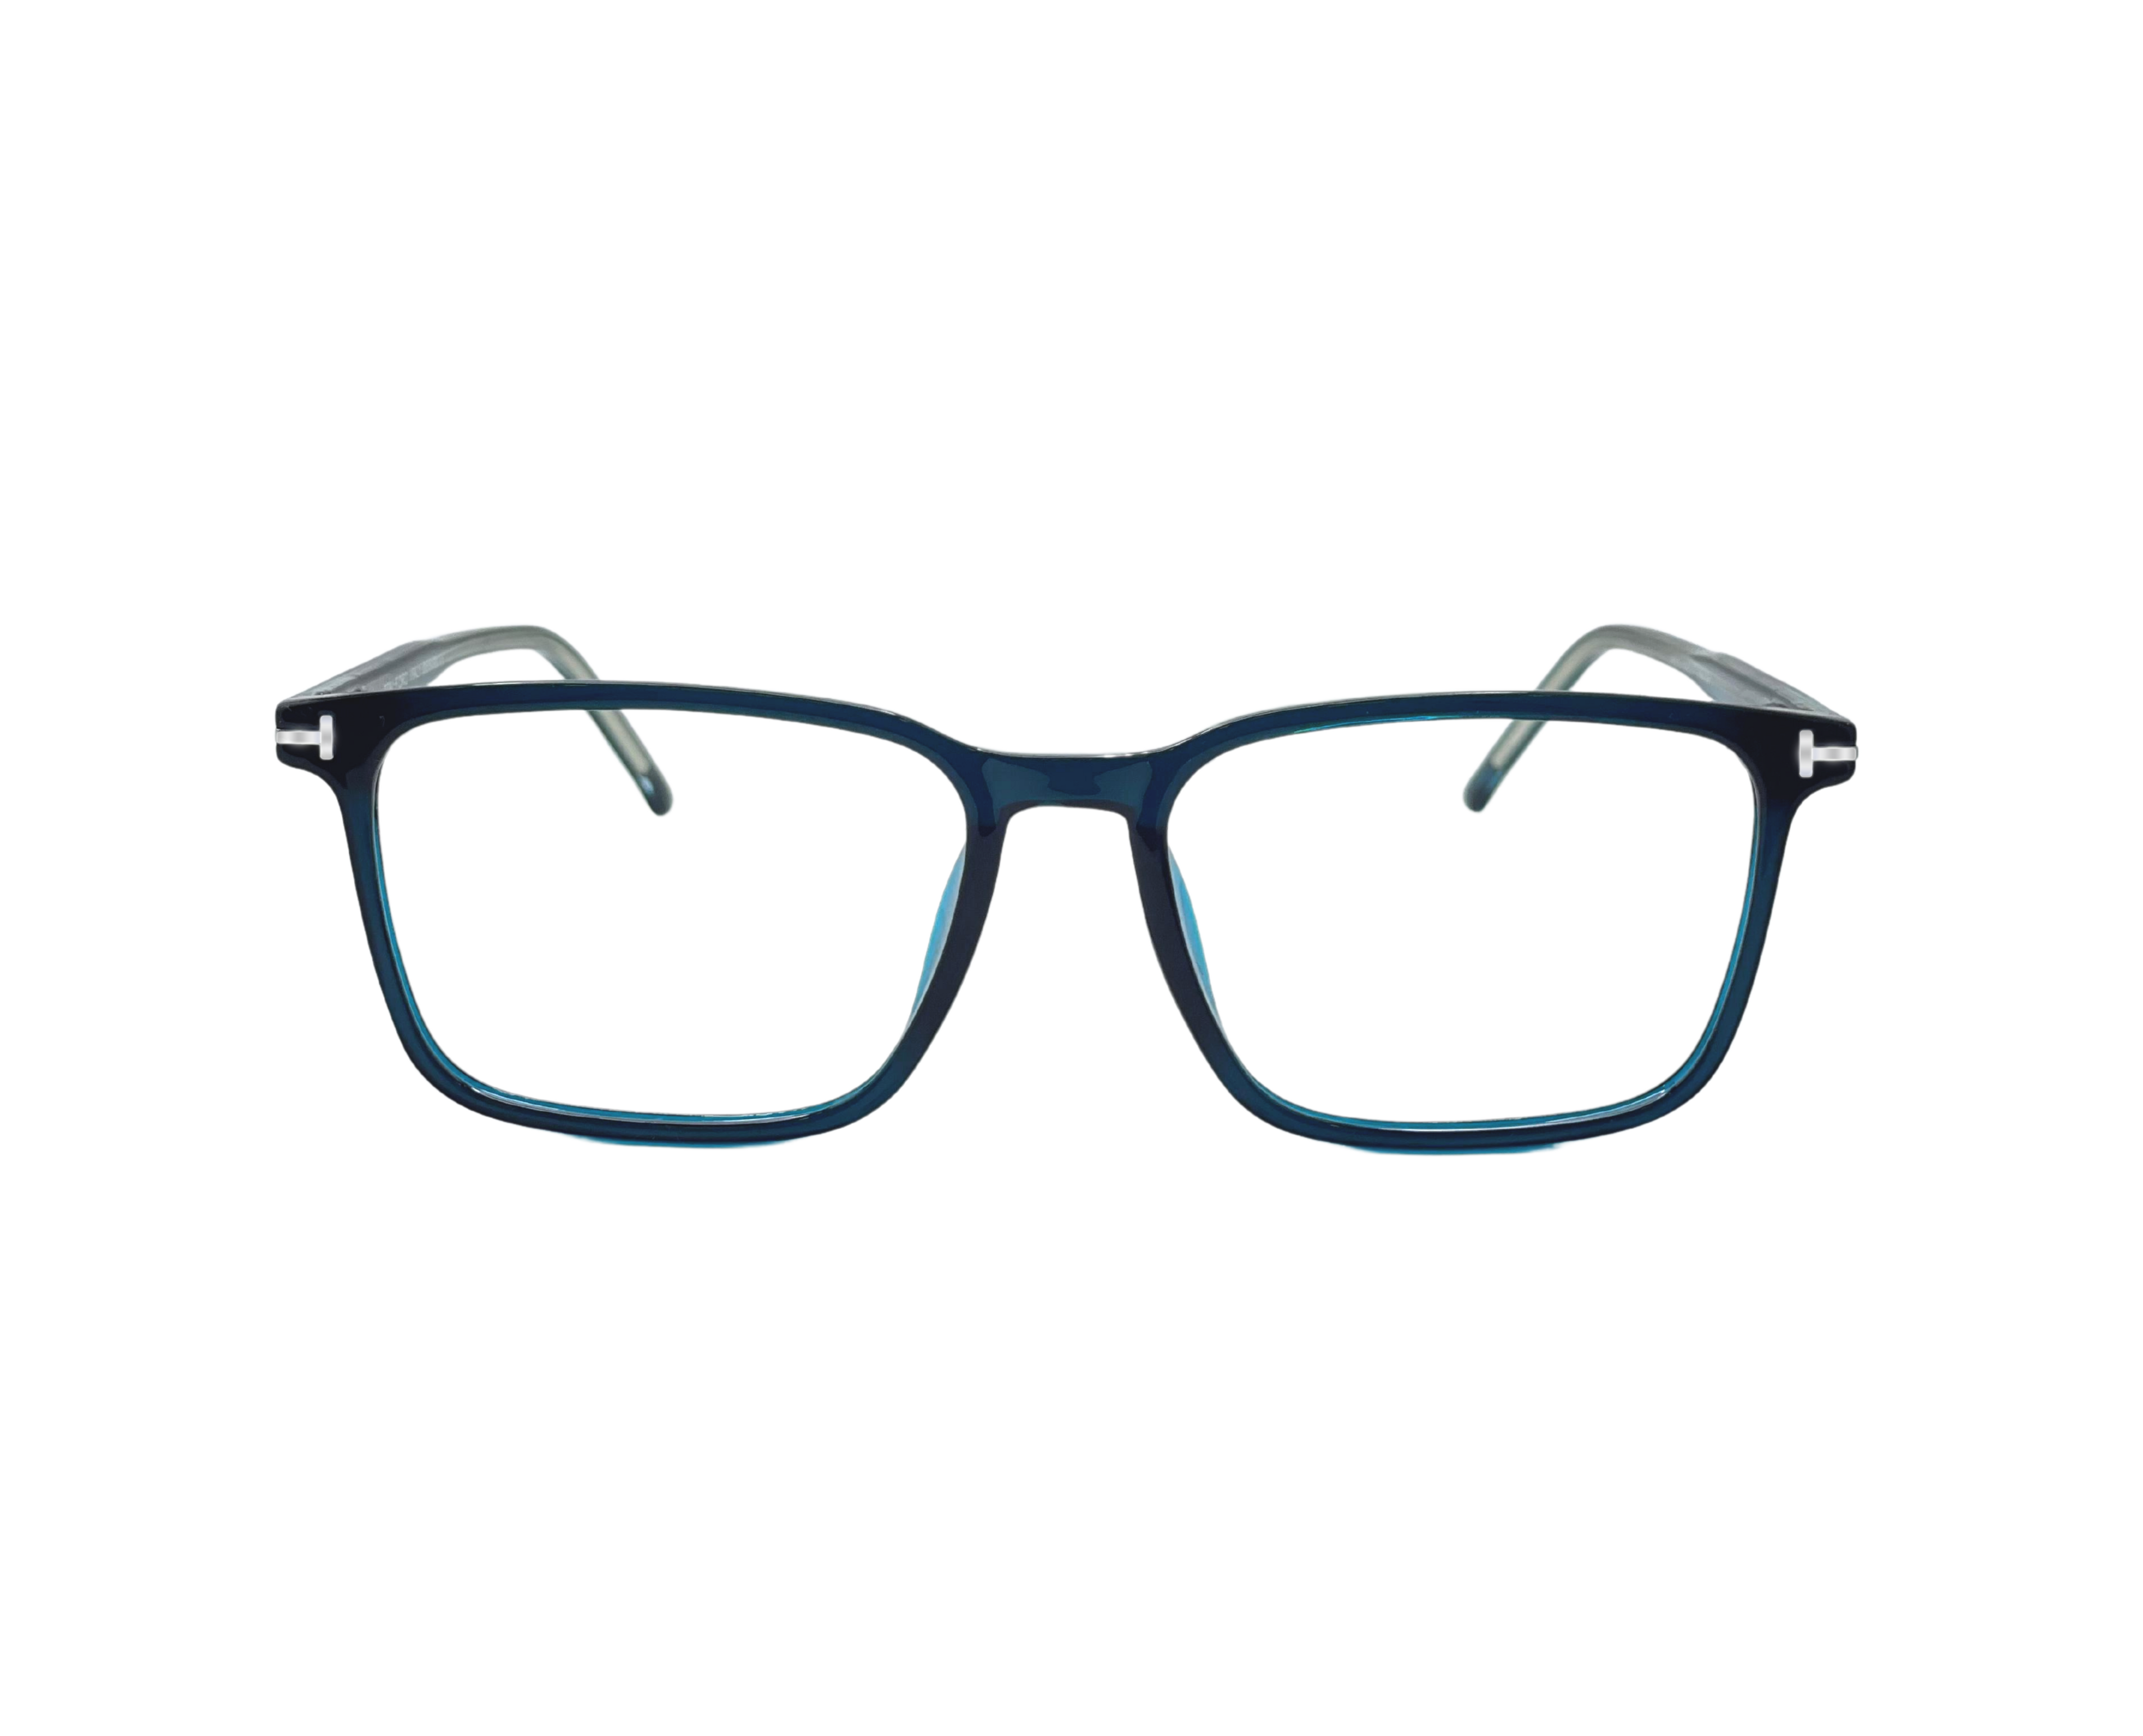 NS Deluxe - 8603 - Blue - Eyeglasses